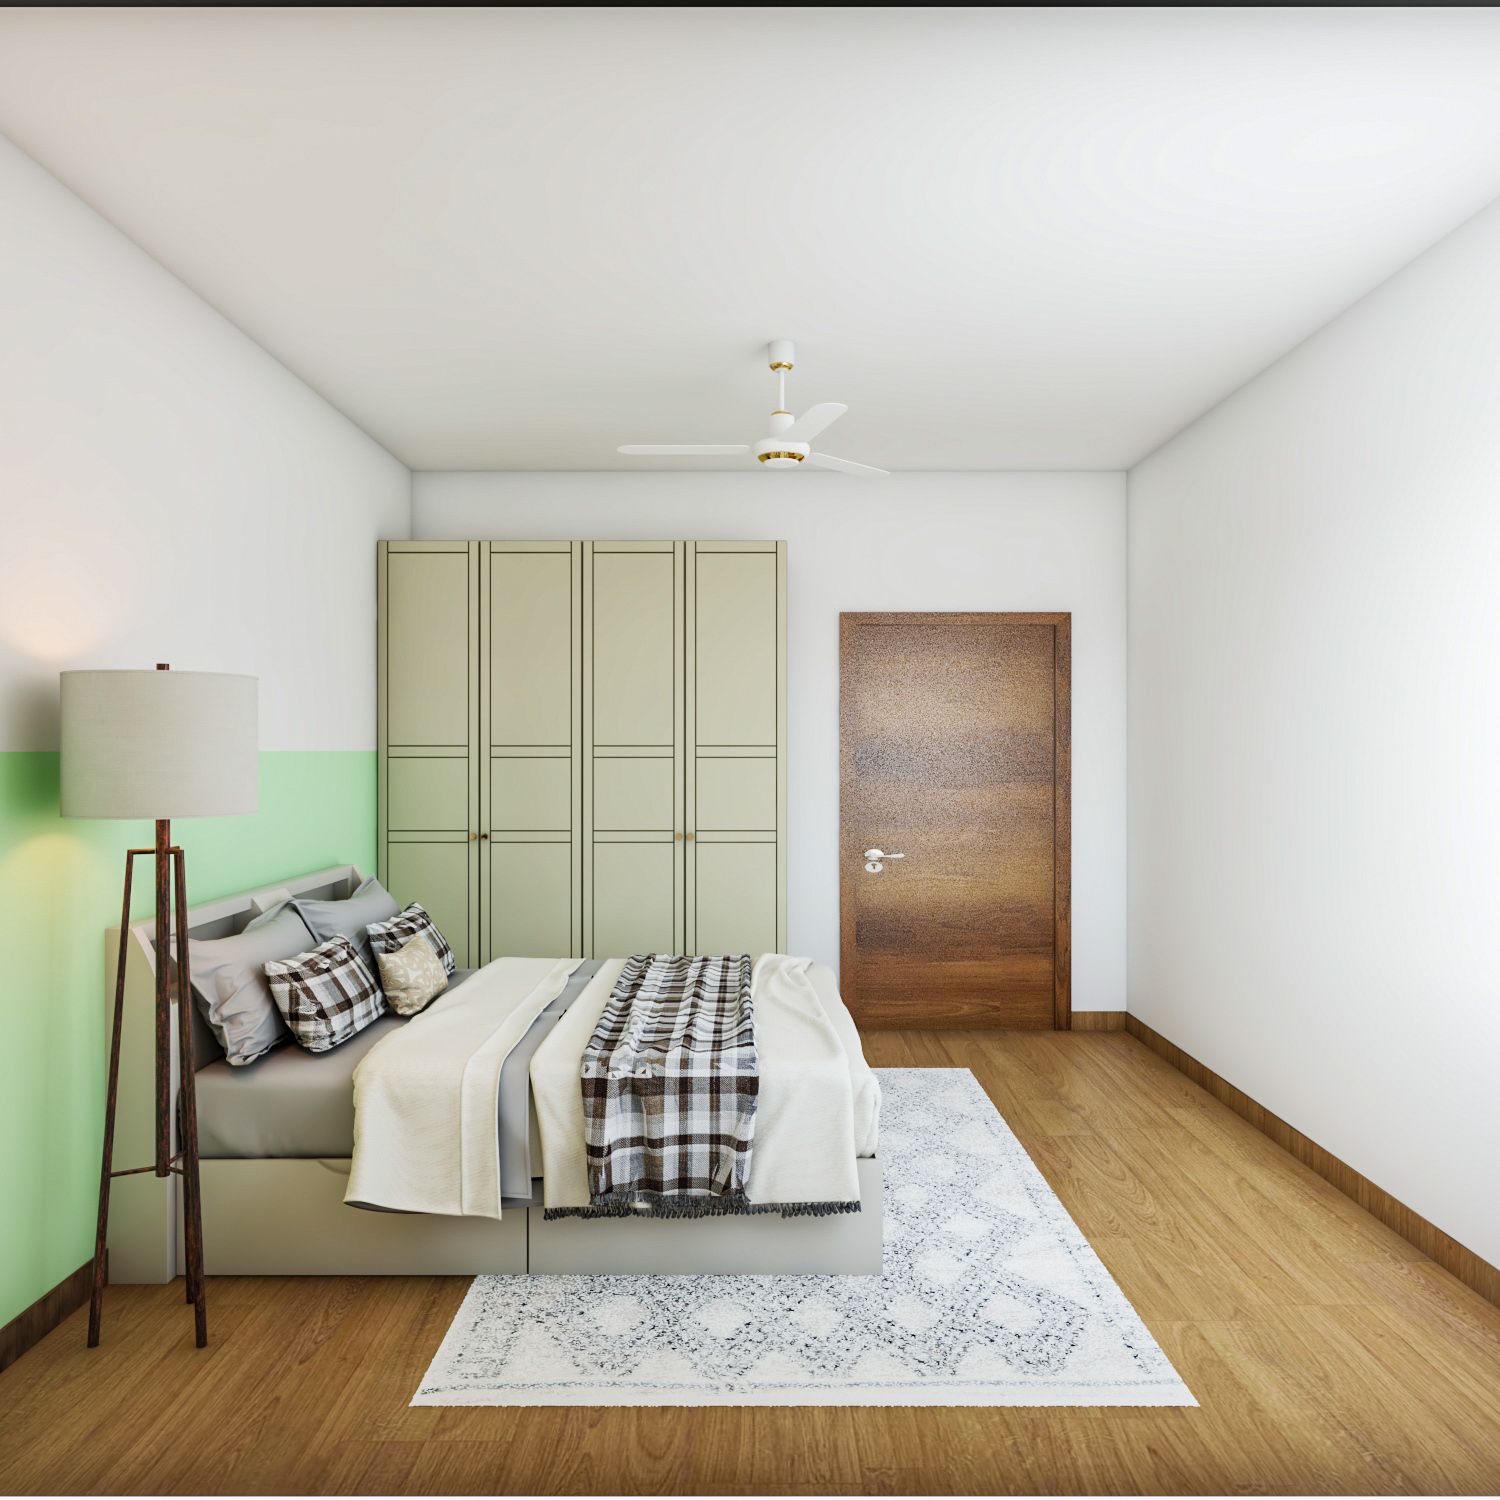 Contemporary Spacious Master Bedroom Design With Grey Decor